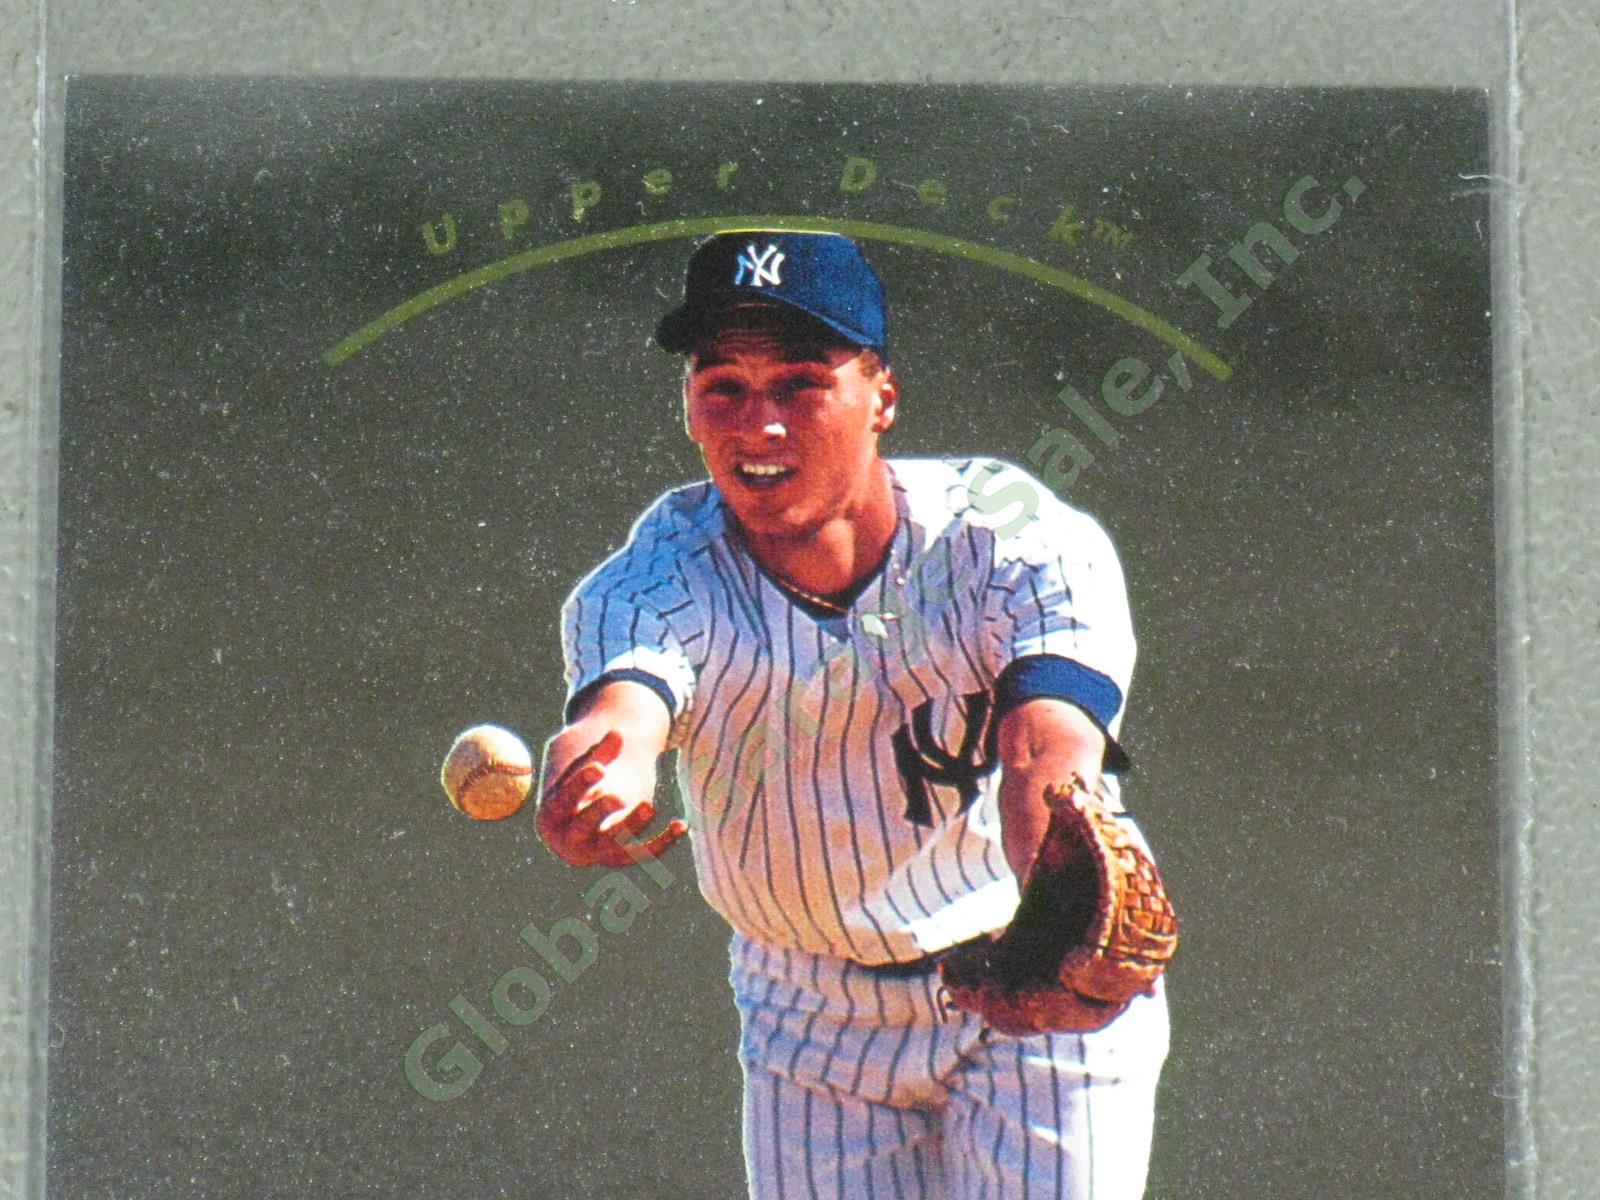 1993 Upper Deck SP Derek Jeter NY Yankees #279 Rookie Card Sealed Until 1/8/17! 1